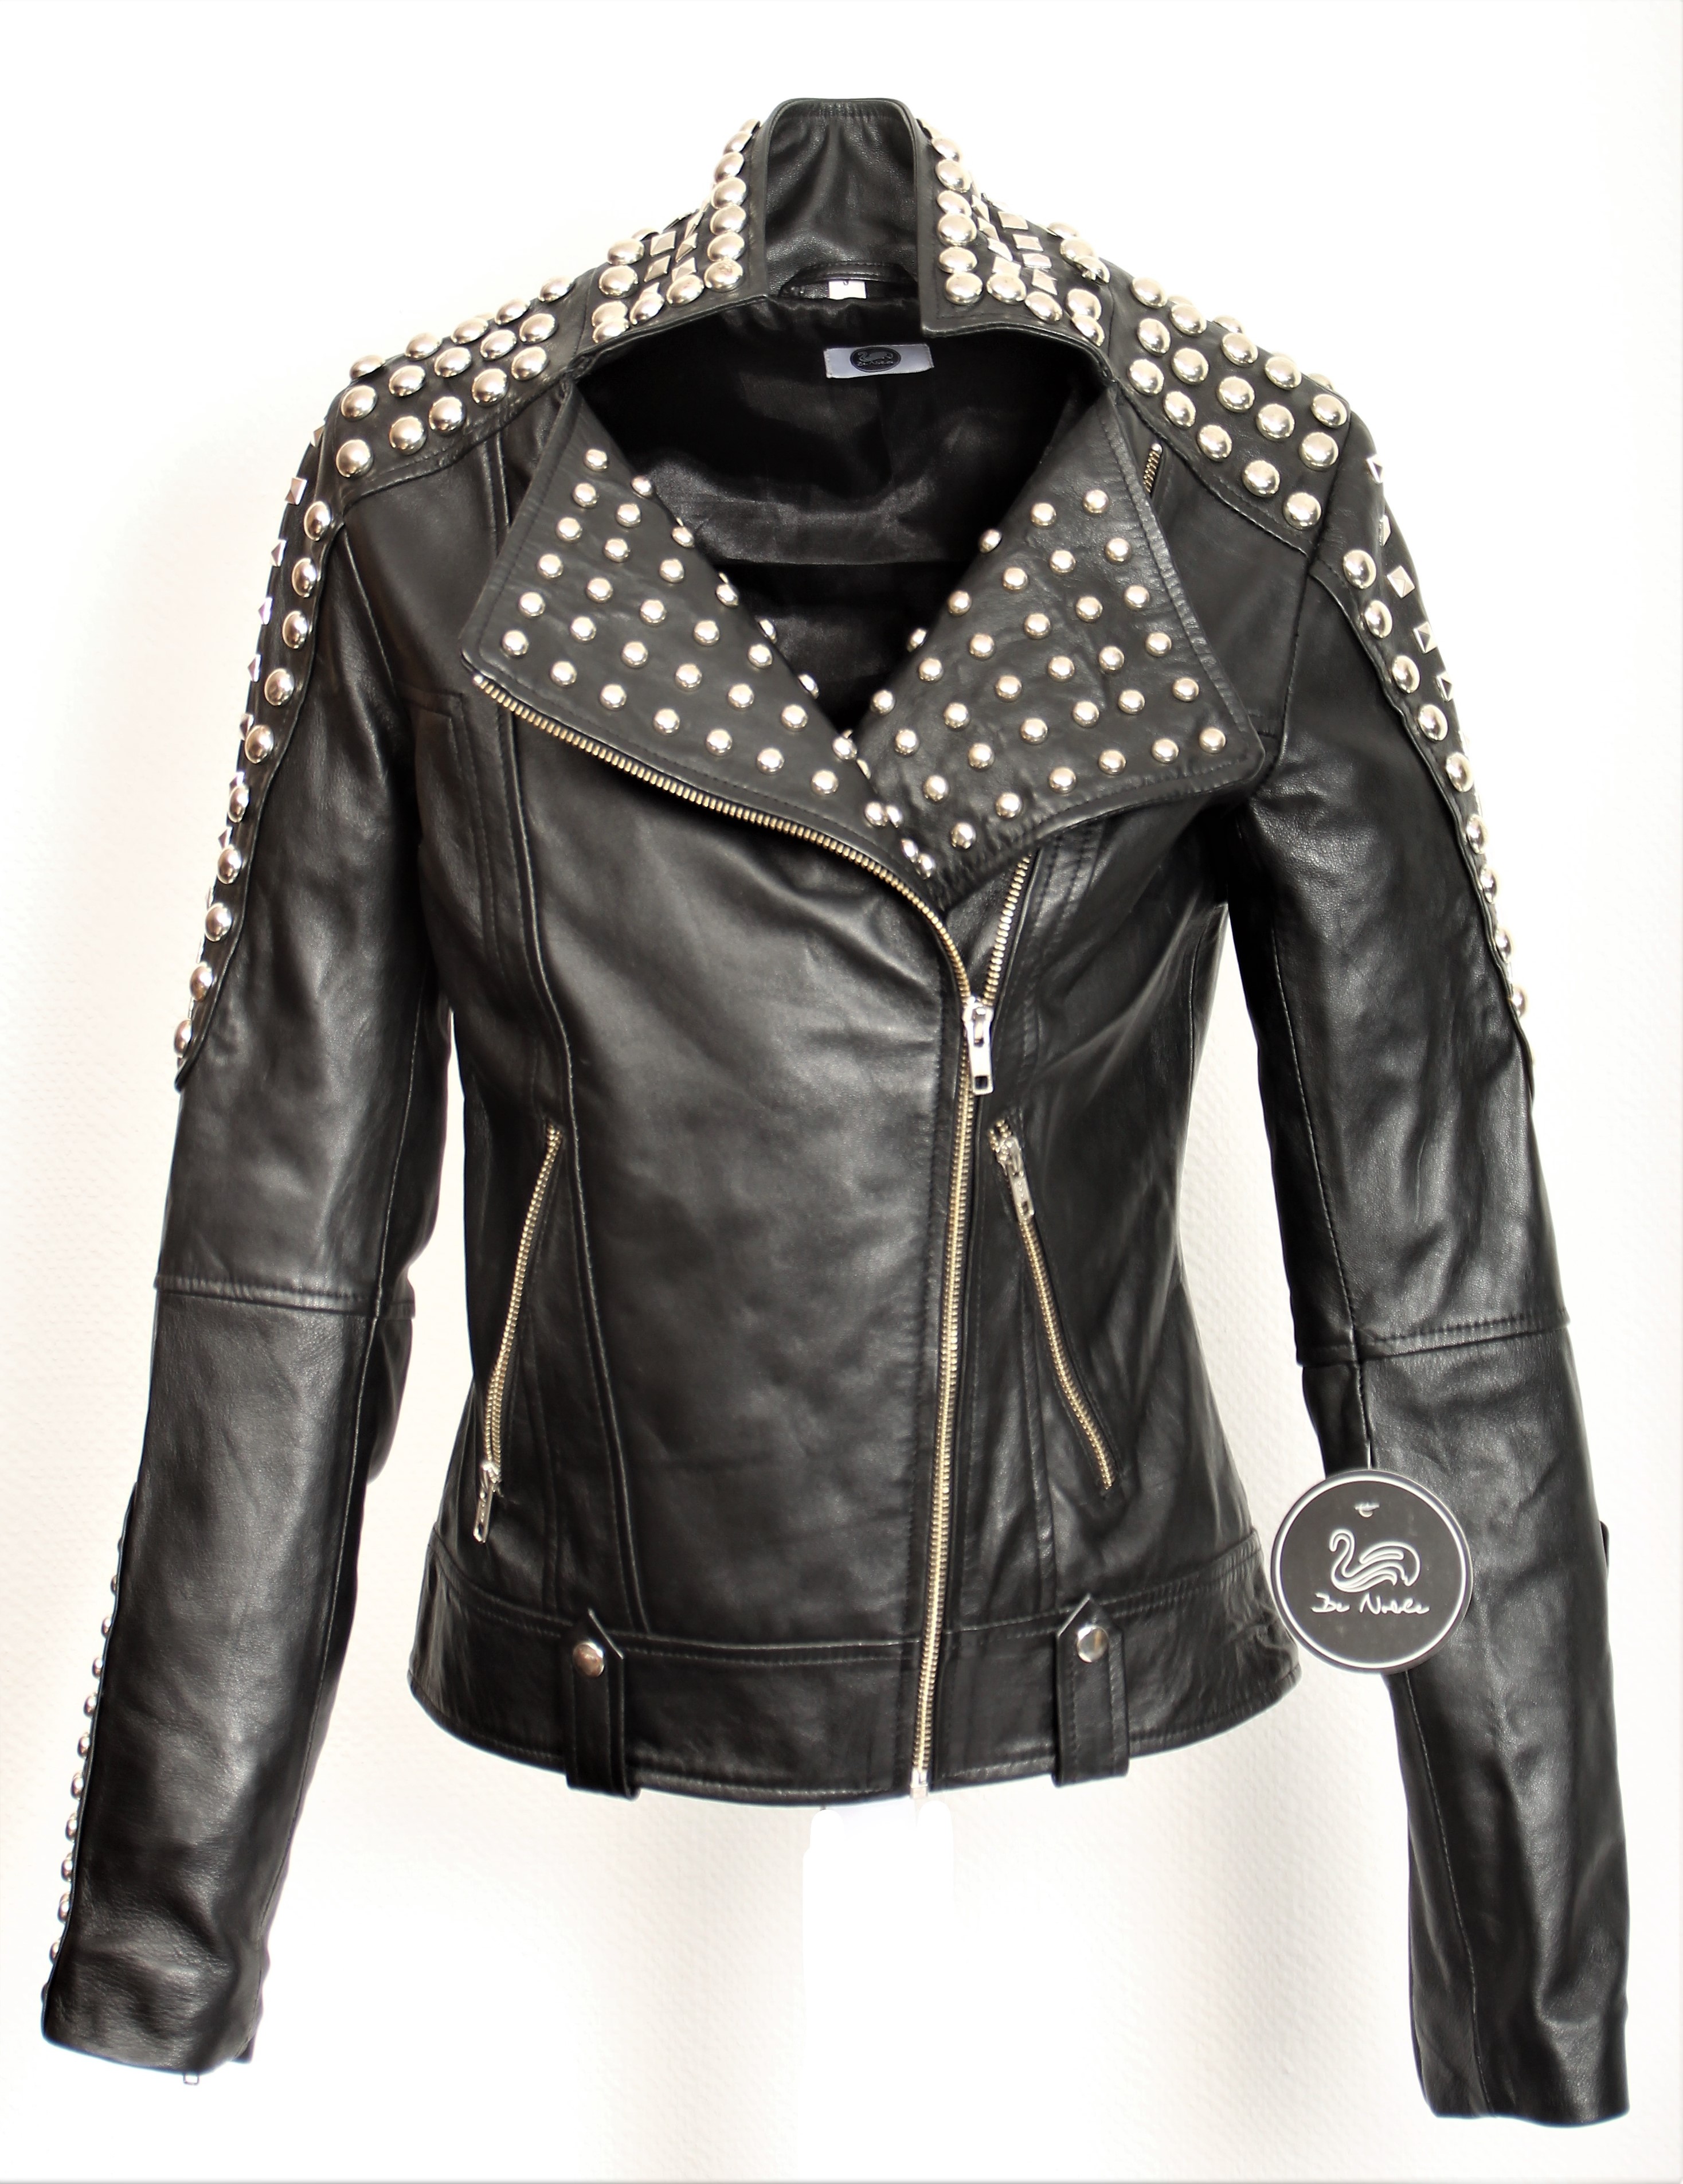 Leather Jacket - Biker Leather Jacket with Rivets in Black